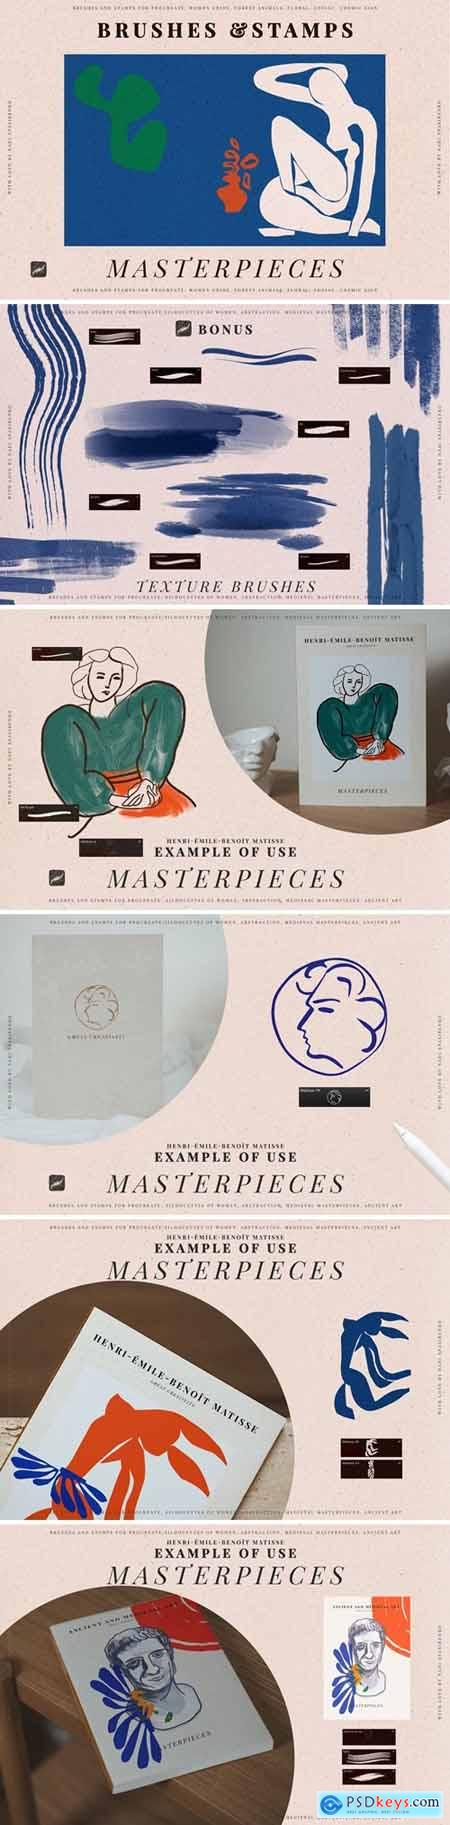 Masterpieces Stamp